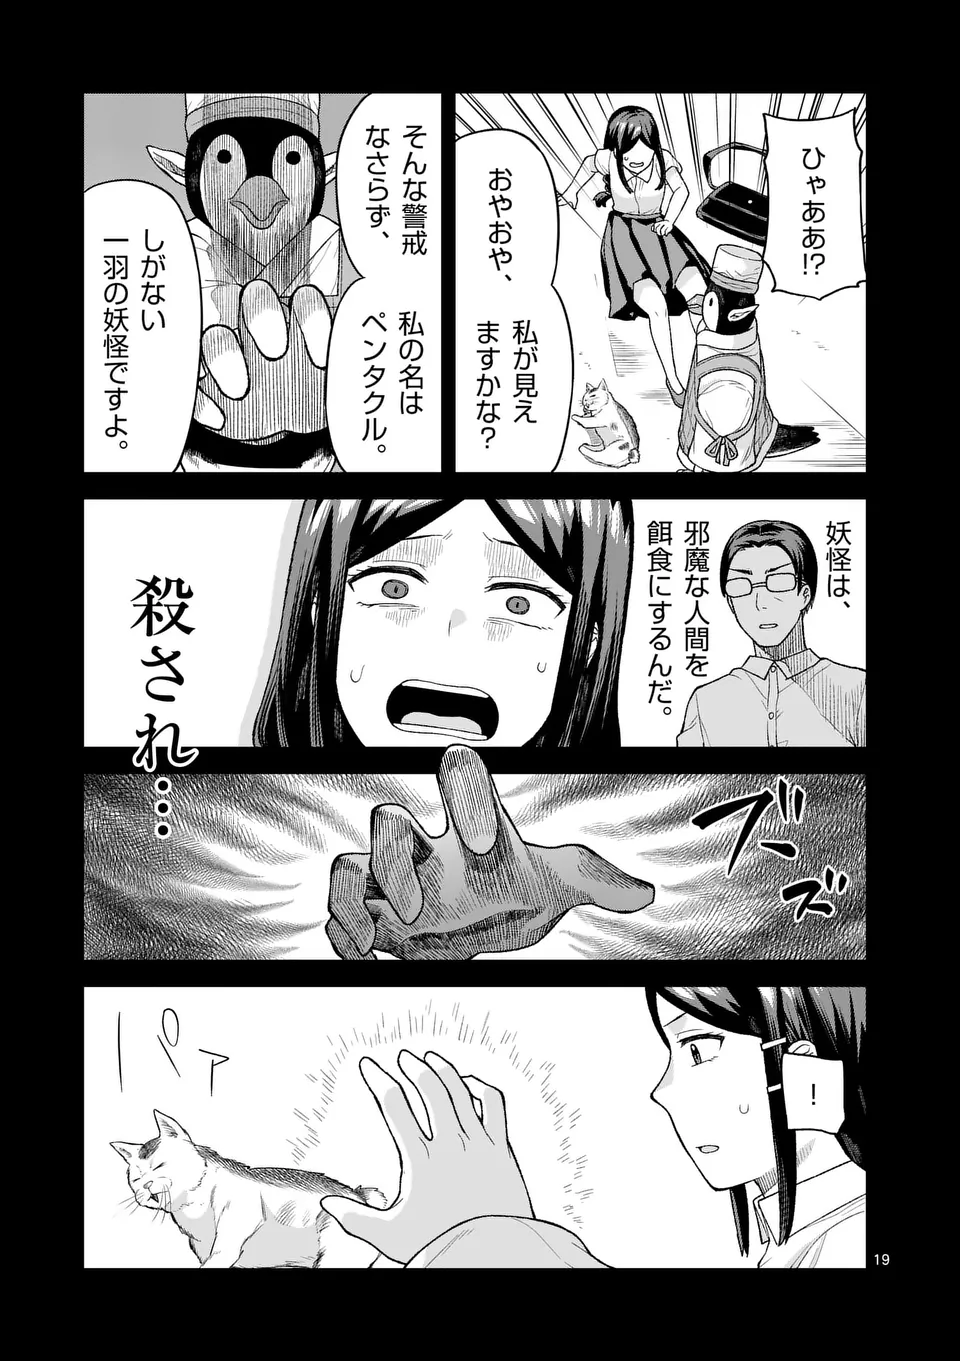 Bakemono Goroshi no Psycholily - Chapter 10.5 - Page 7